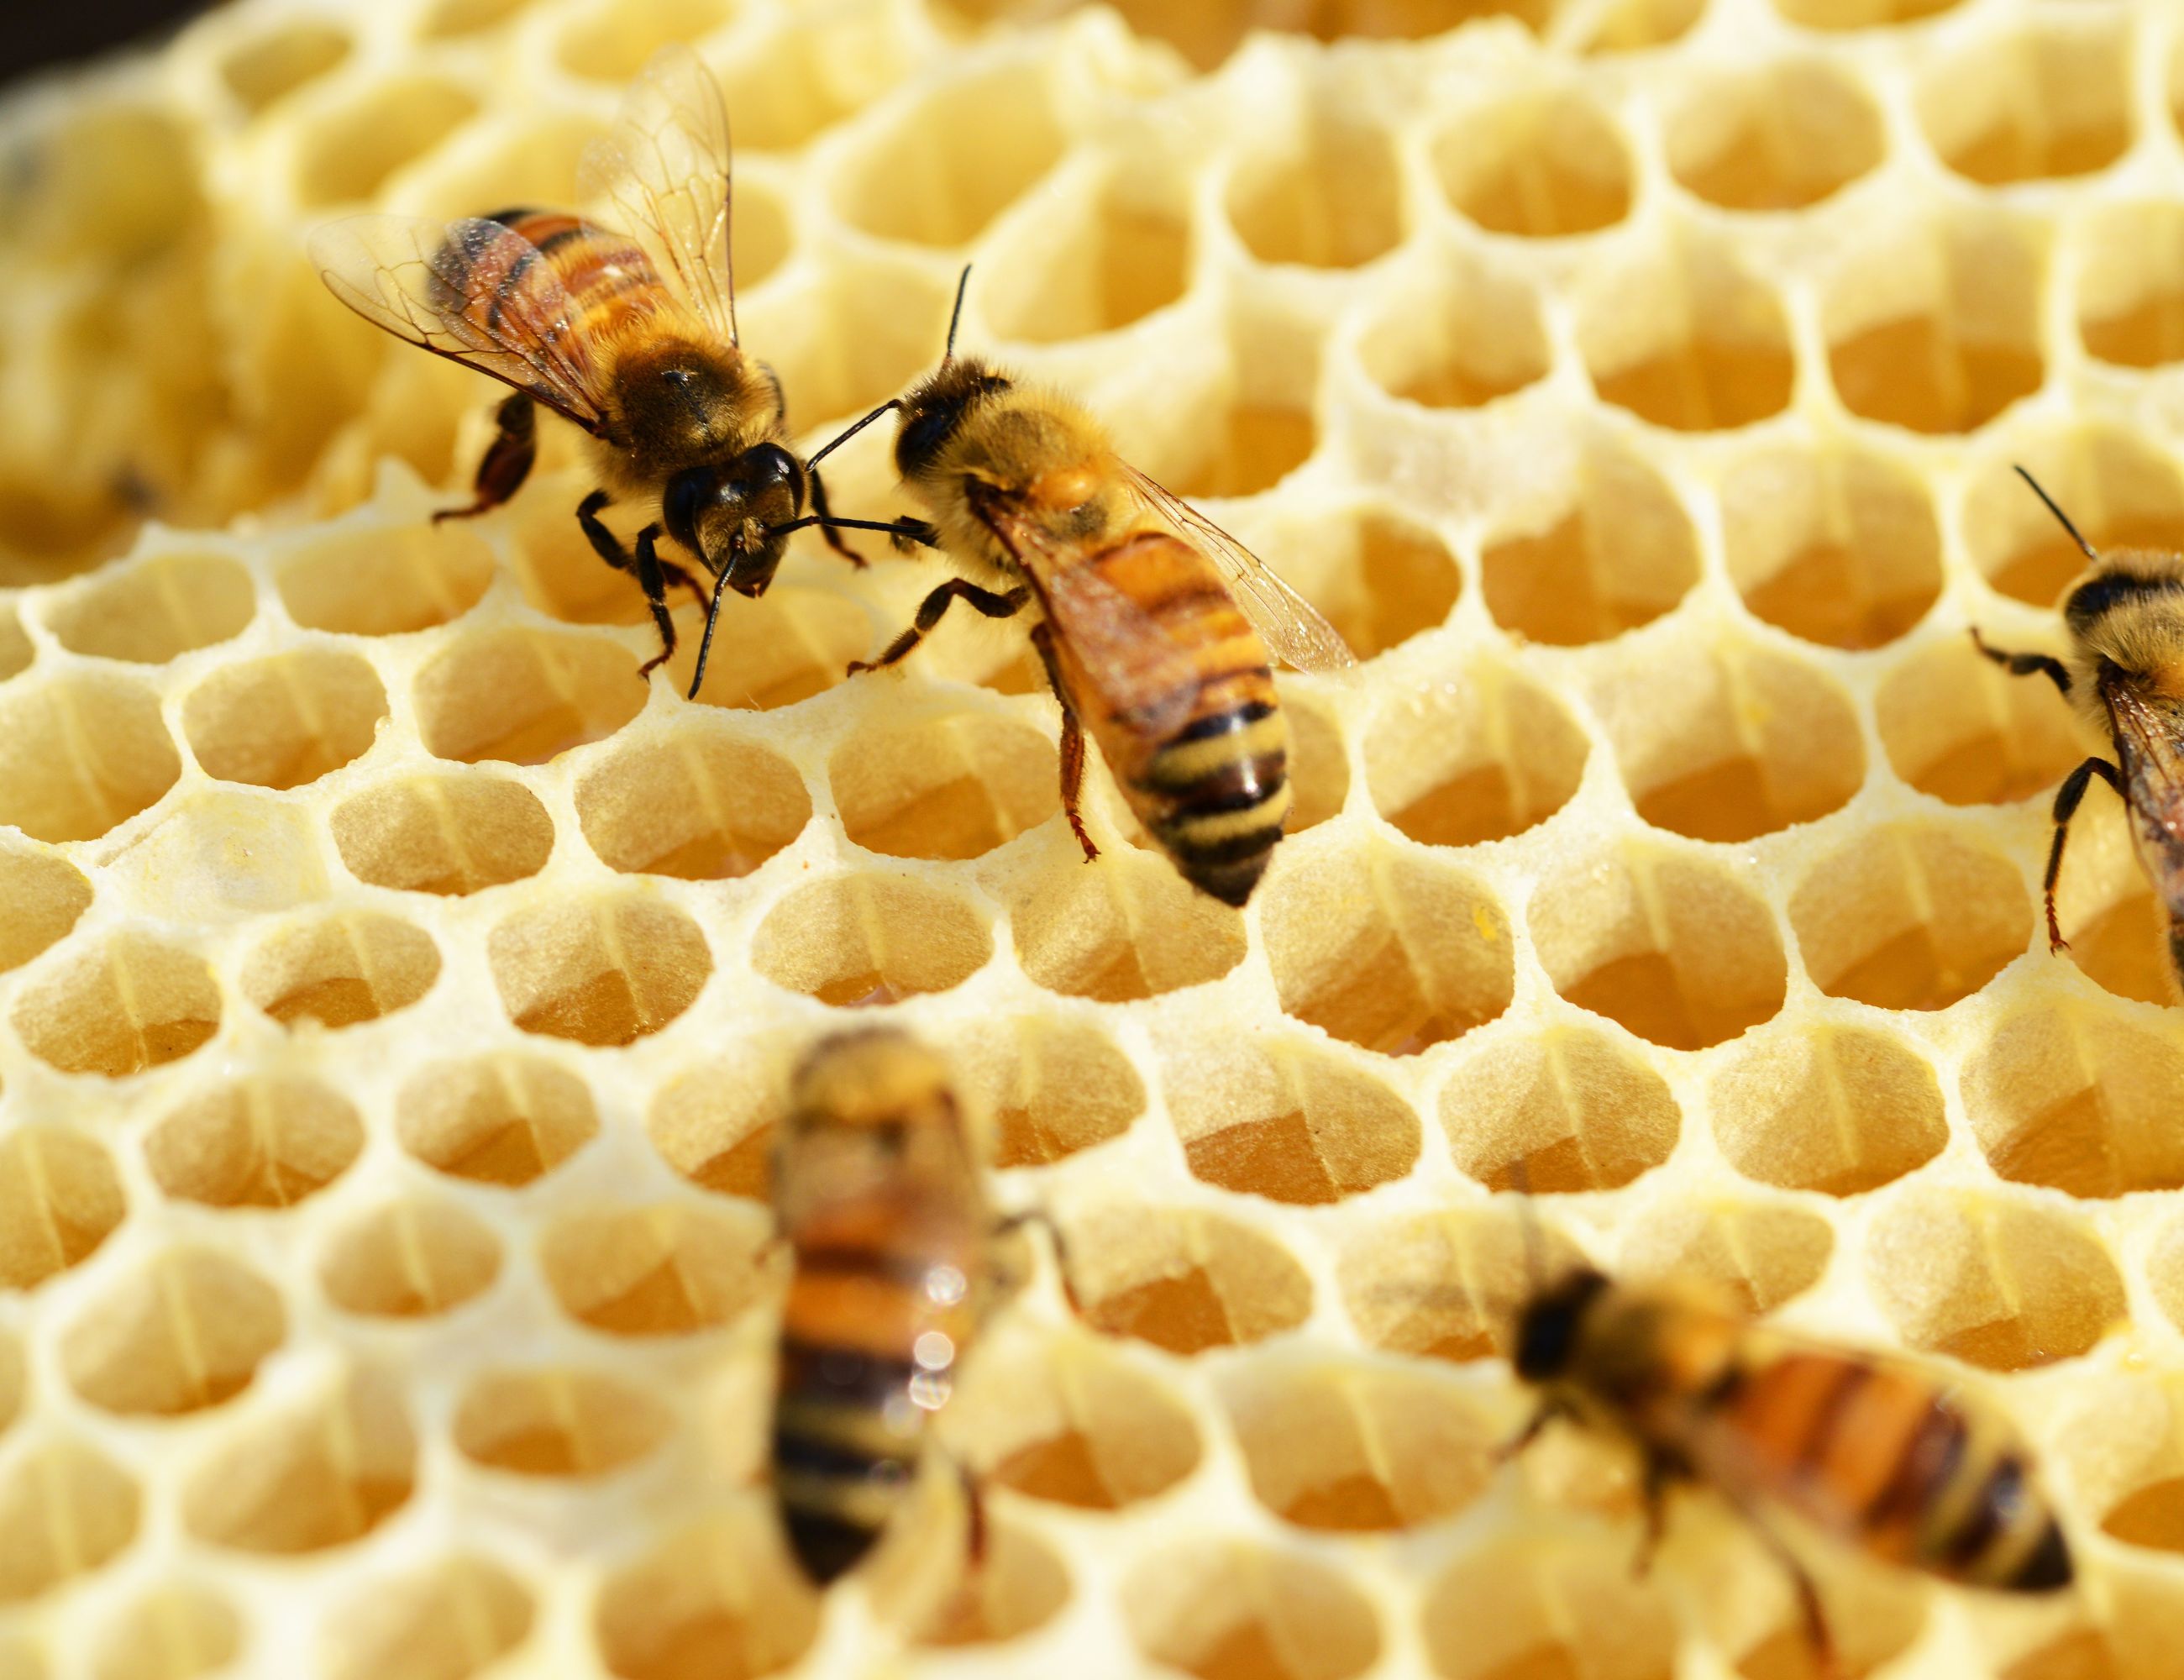 Honey bee on new wax comb